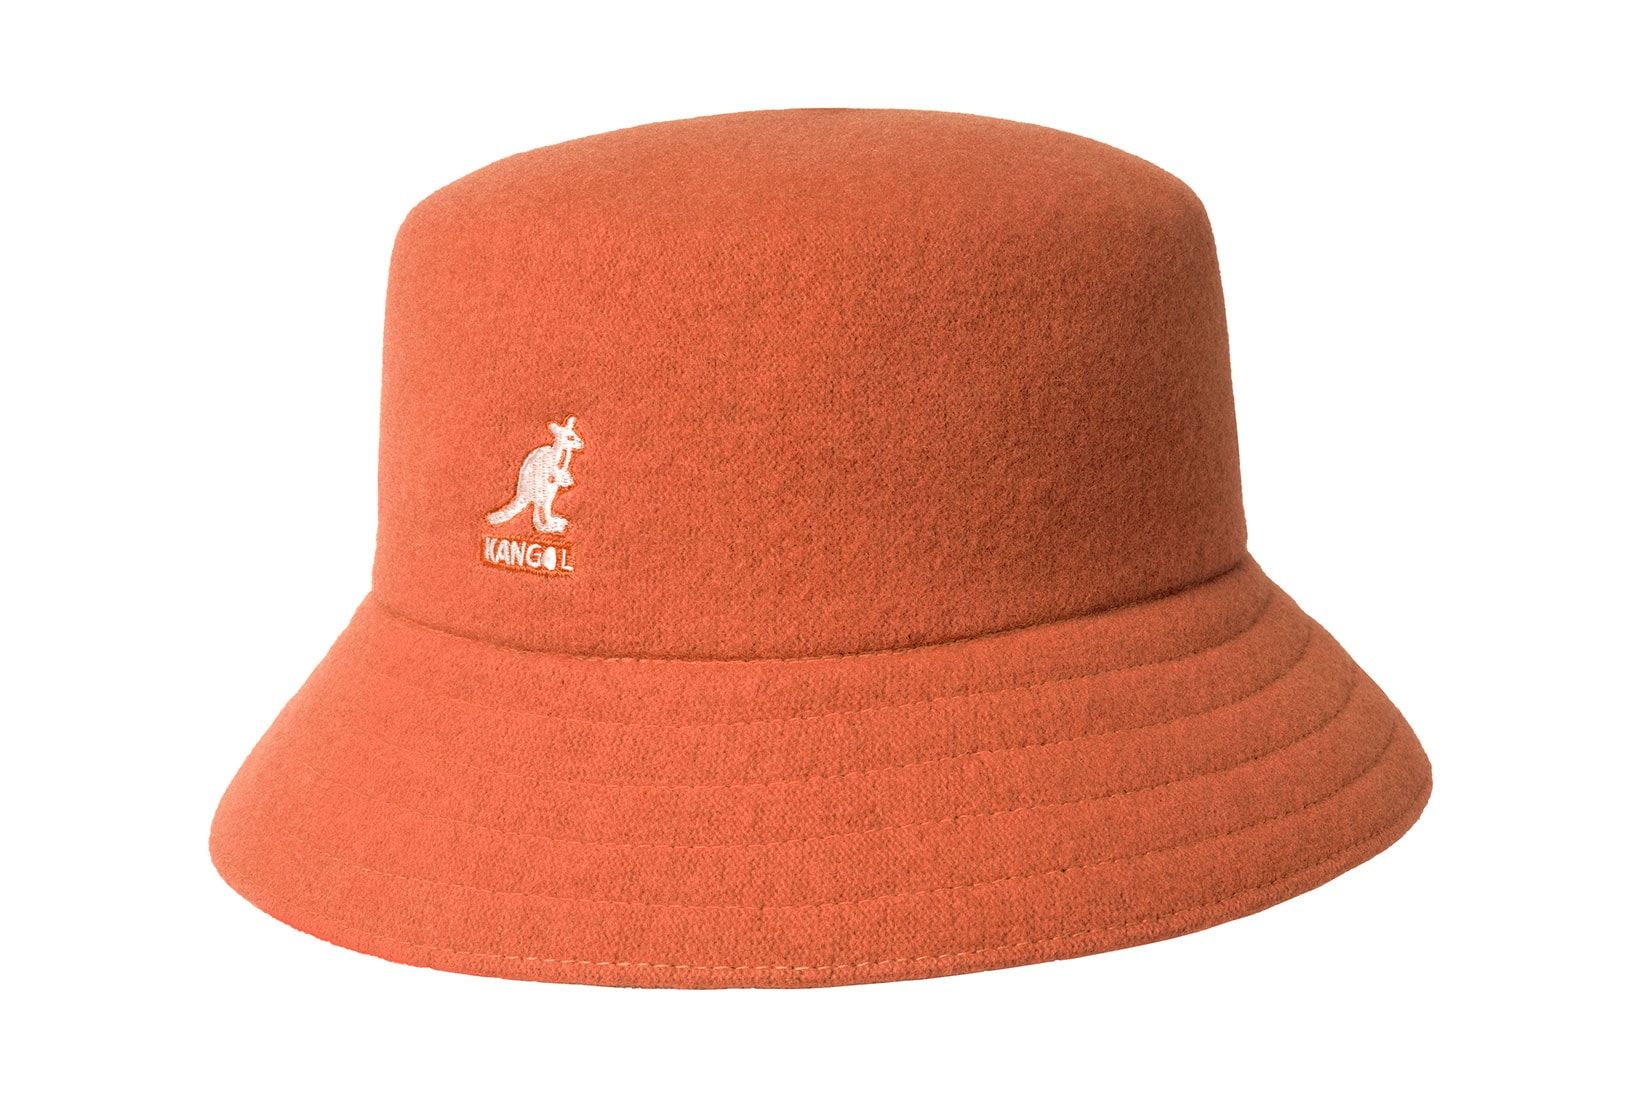 kangol fall winter fw201 headwear collection hats accessories bucket cotton orange